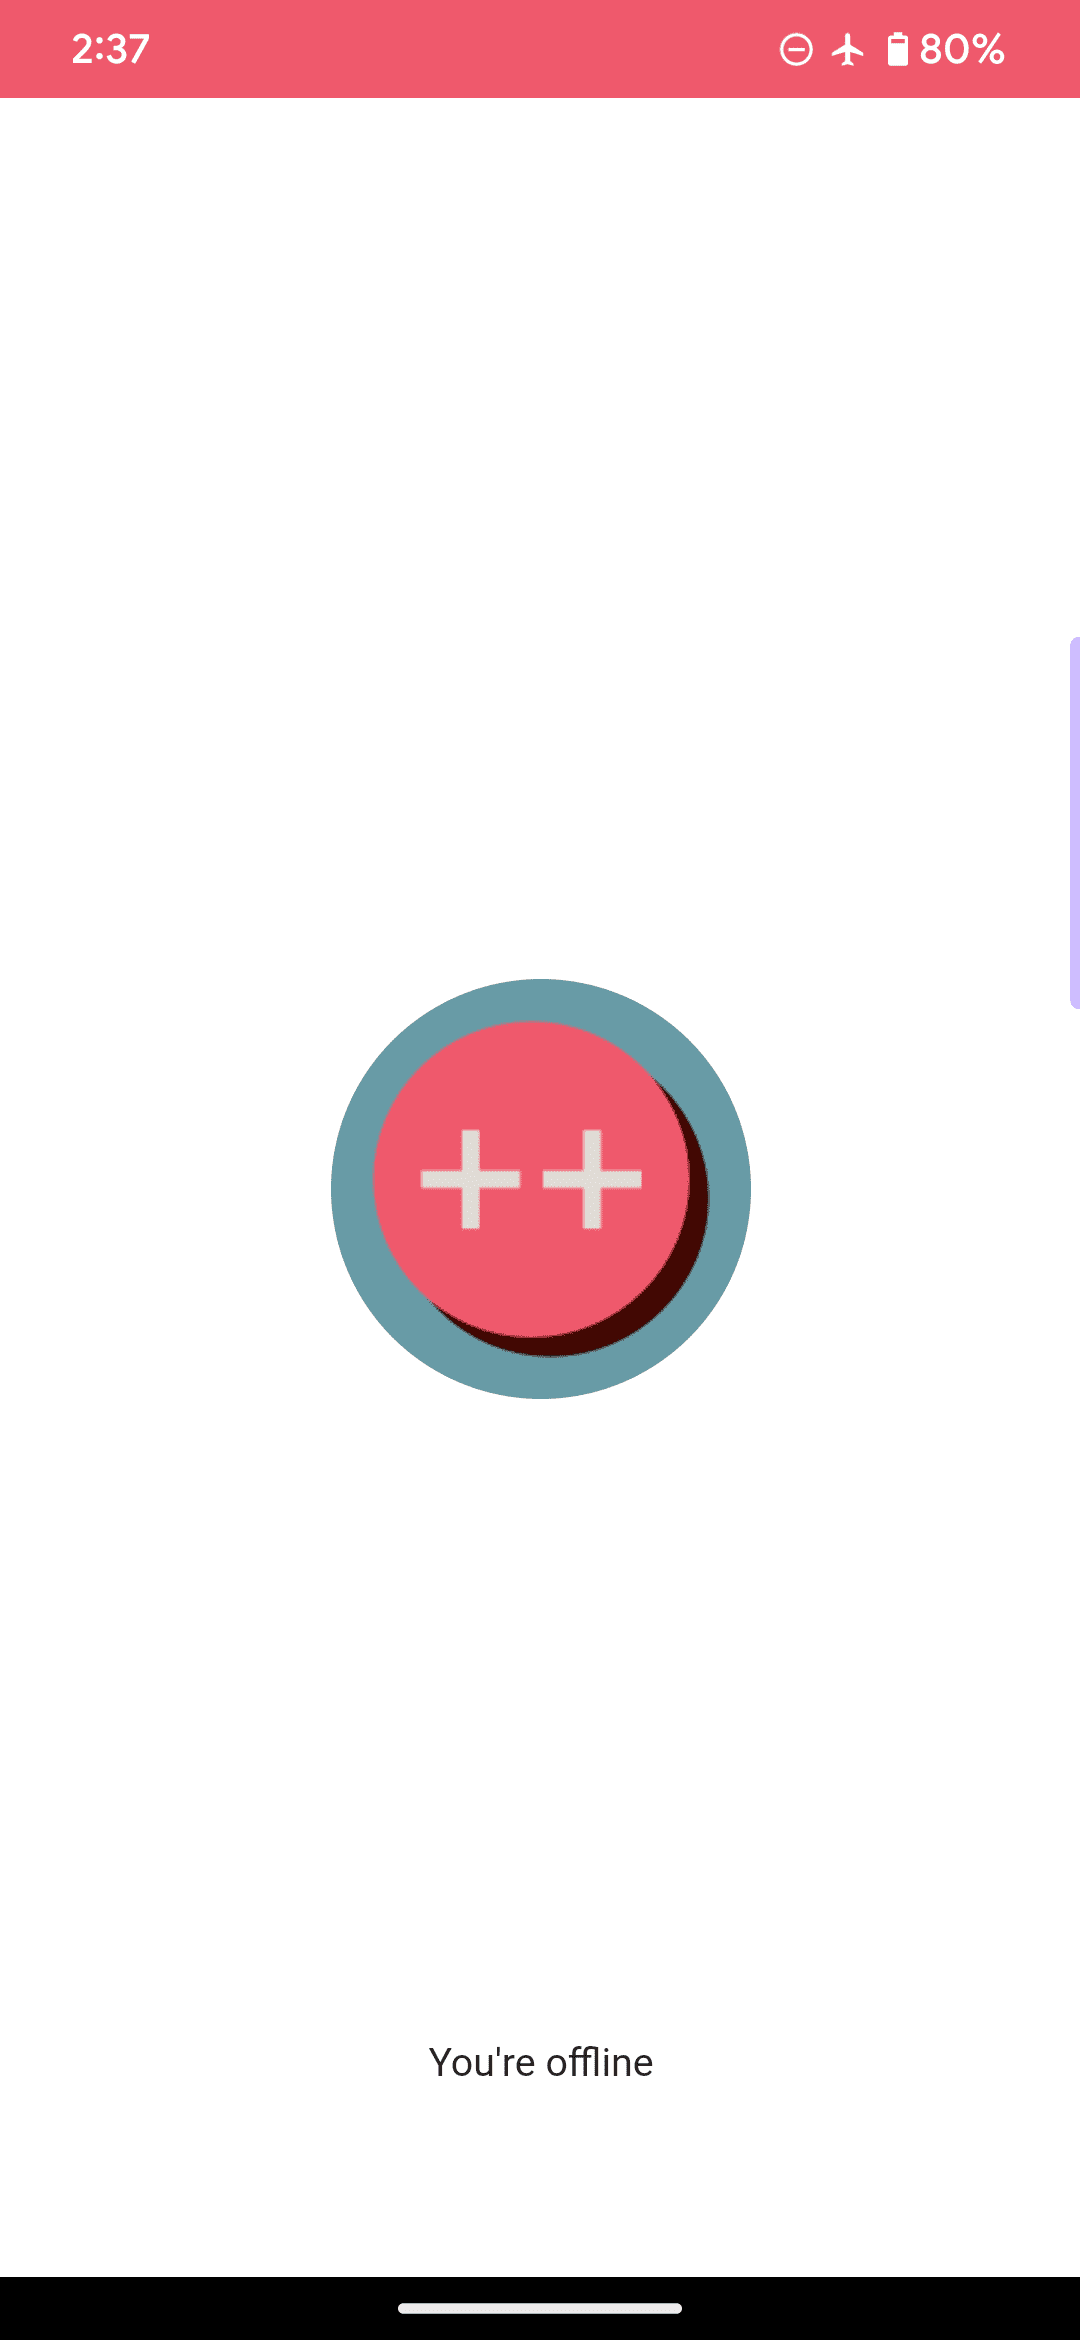 Halaman offline default untuk contoh aplikasi web, dengan logo lingkaran merah muda dan dua tanda tambah, serta berisi pesan &#39;Anda sedang offline&#39;.